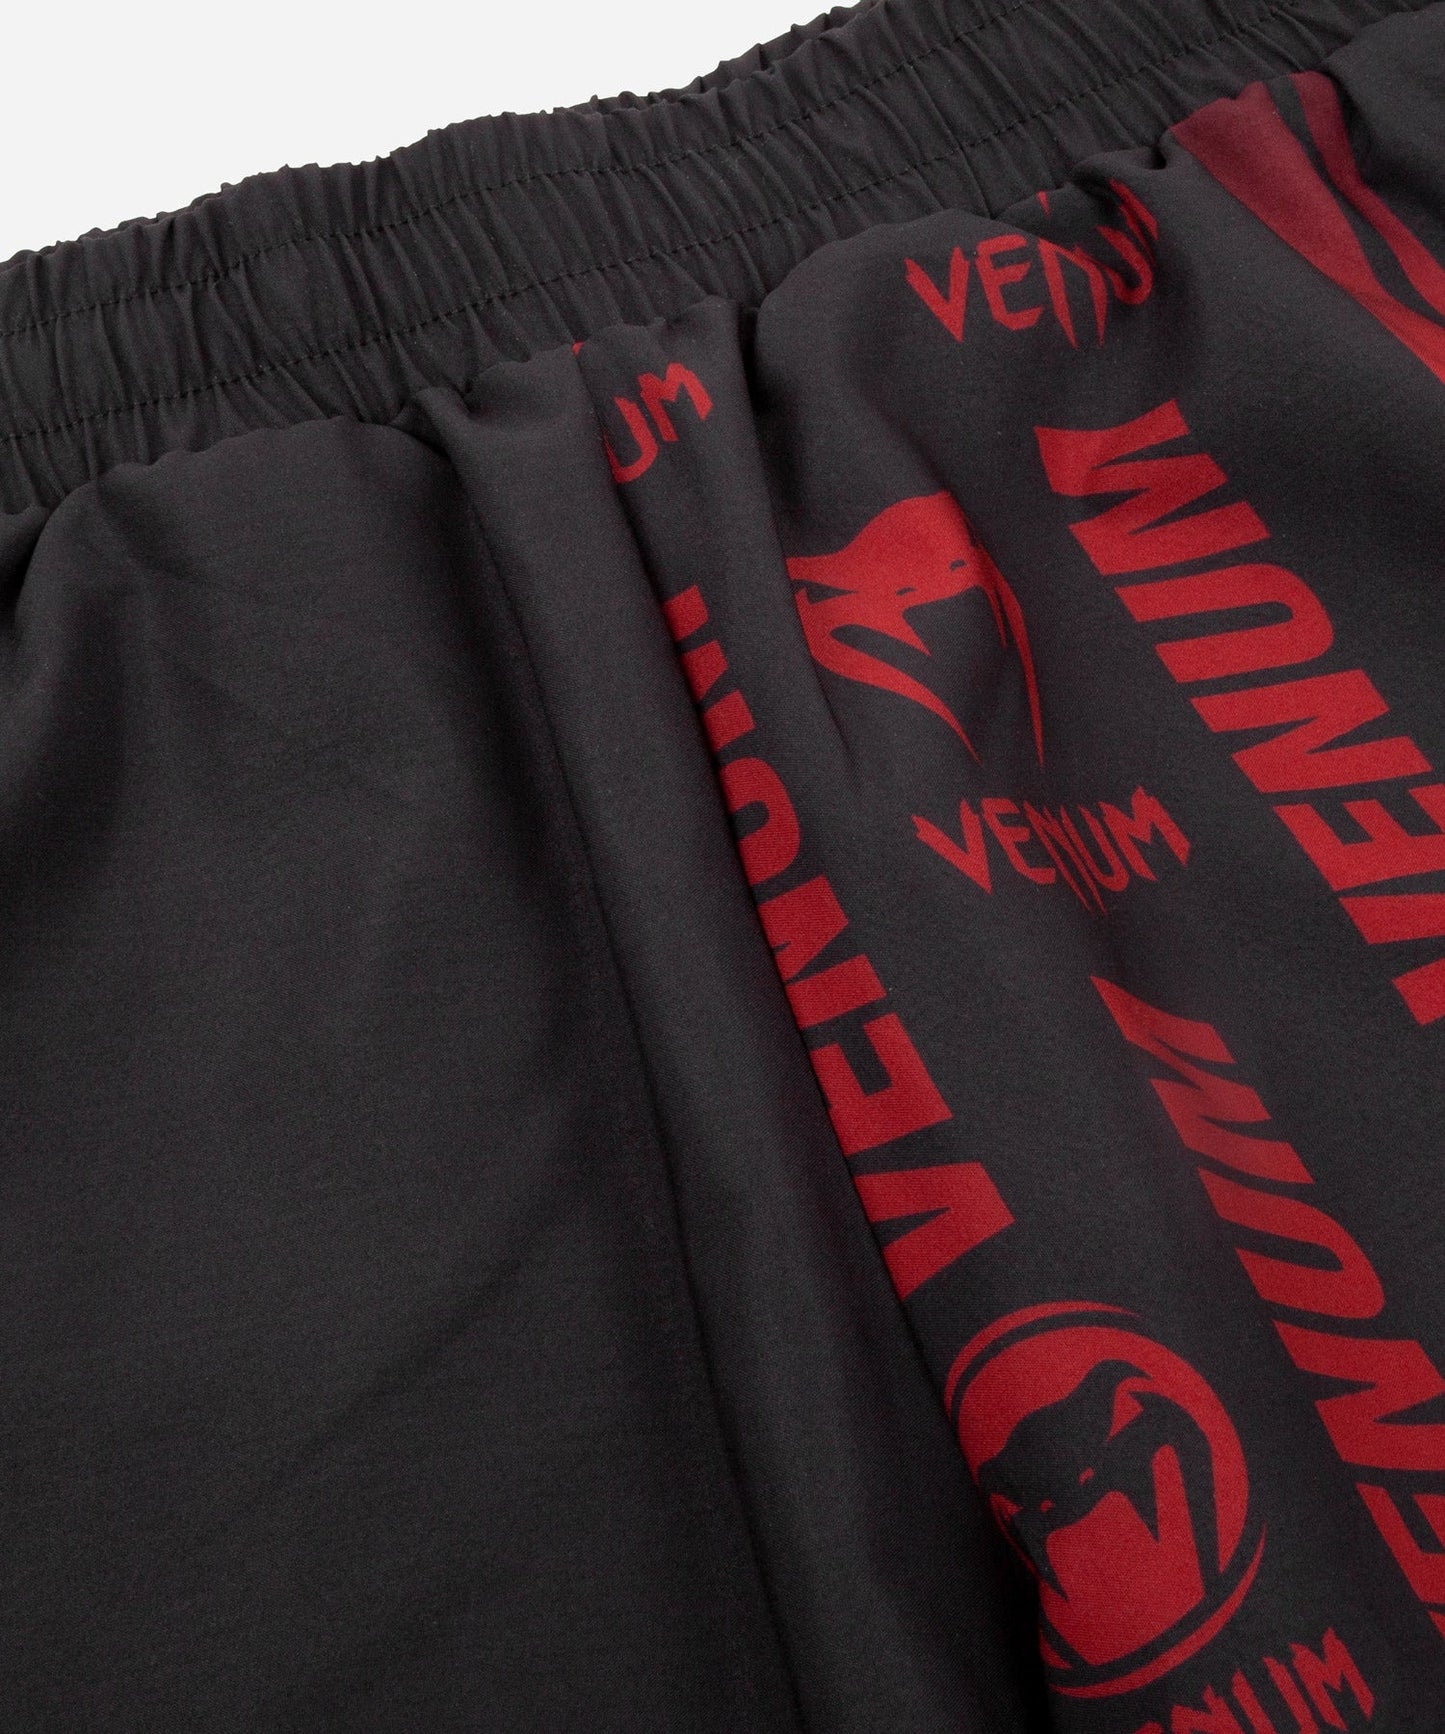 Venum Logos Training Shorts - Black/Red